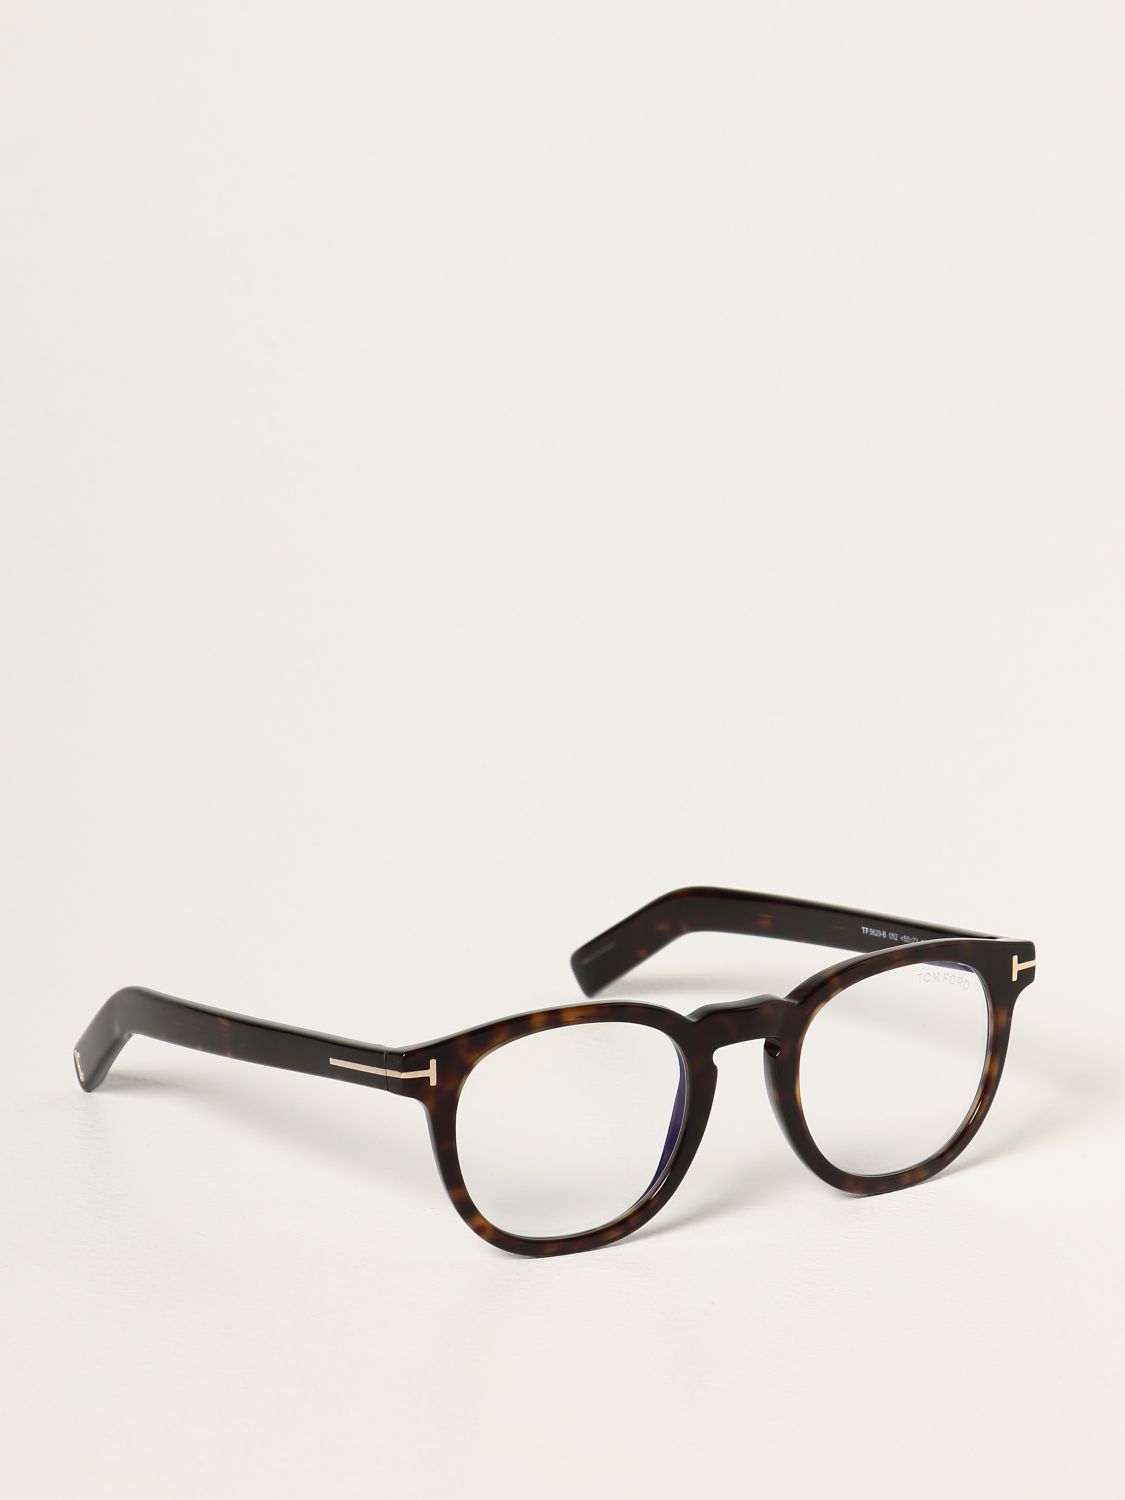 Gafas Tom Ford: Gafas hombre Tom Ford marrón 1